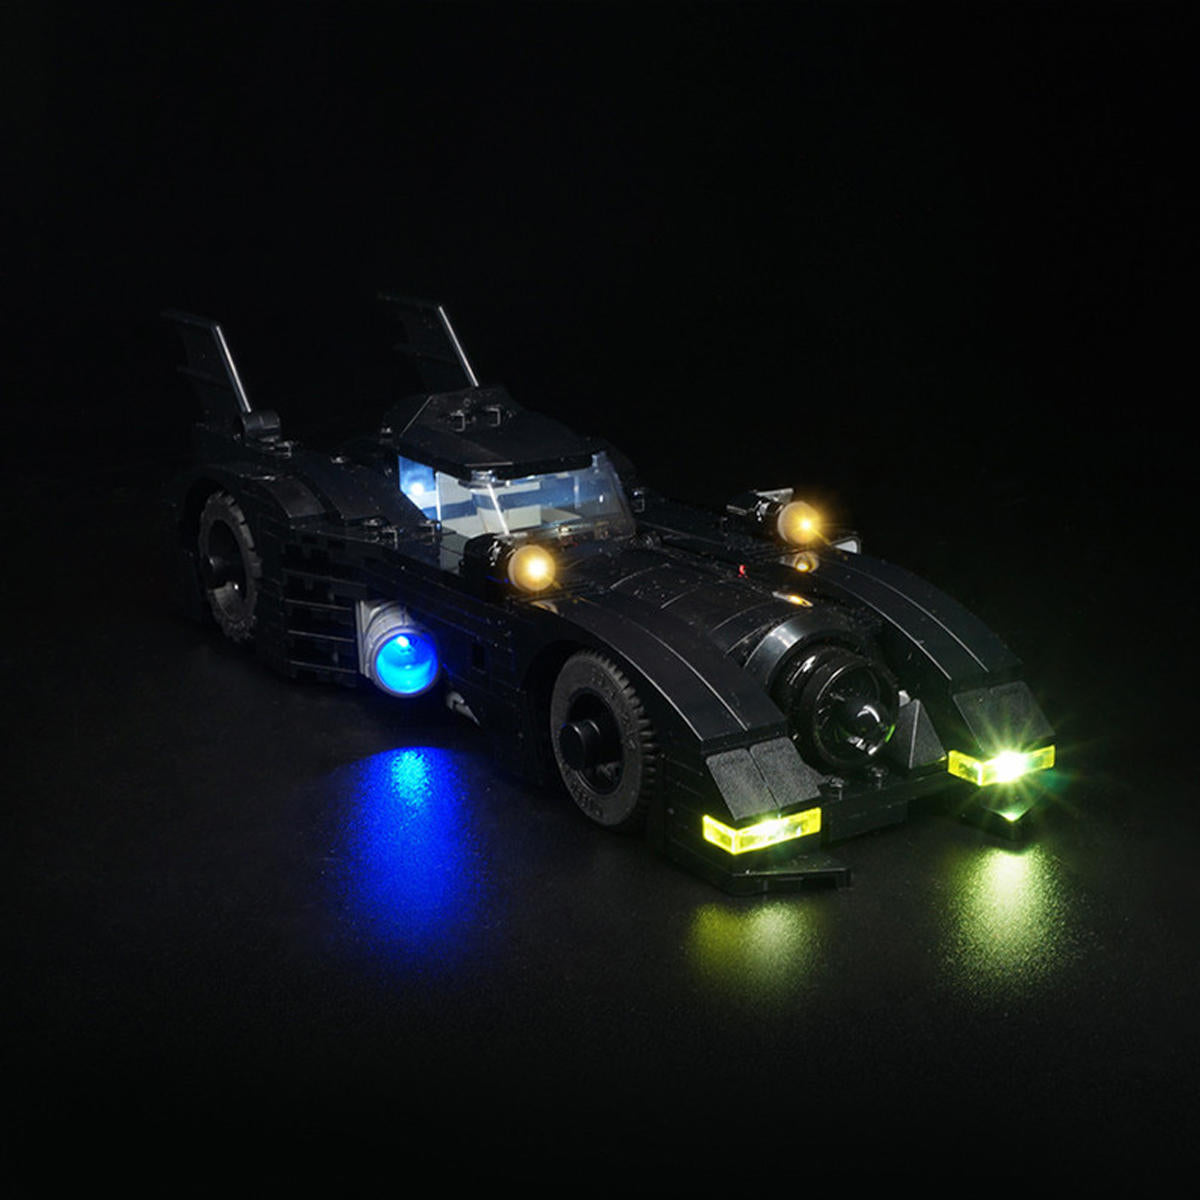 dhz led-lichtverlichtingsset alleen voor lego 40433 1989 batmobile mini-versie autobaksteen